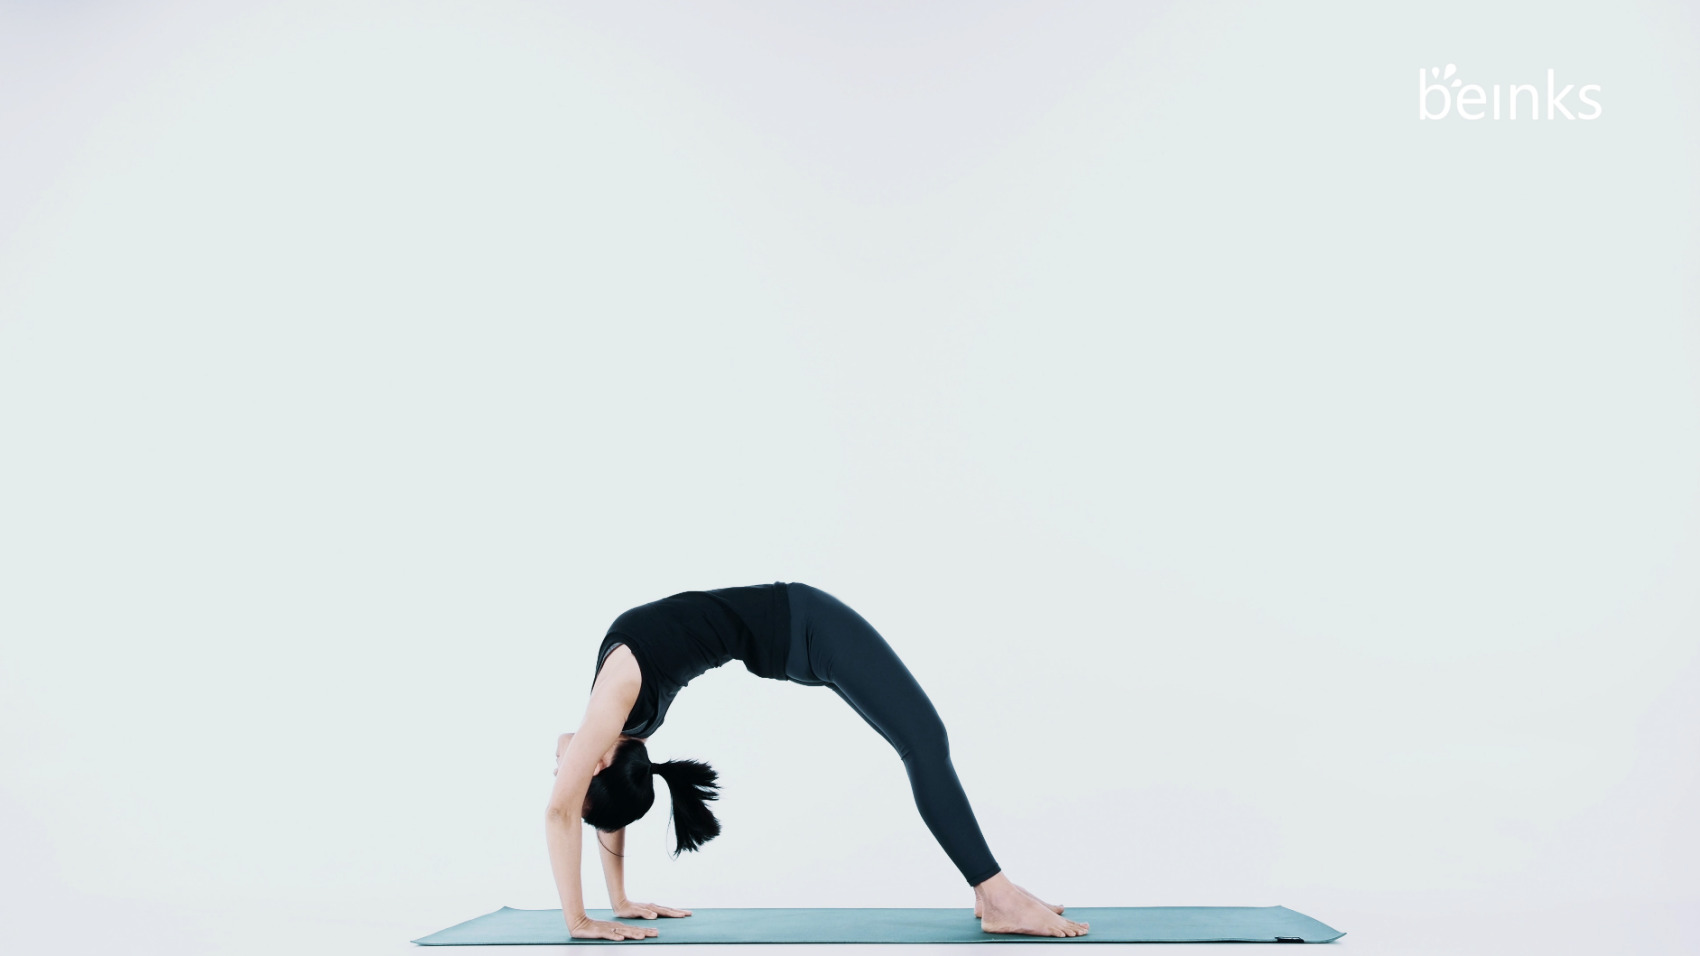 Yoga District - Monday Movement: Chakrasana or Wheel pose🌈 Benefits:  Stimulates the breath, opens chest and shoulders, improves spinal  flexibility, and improves strength Poses to progress to Chakrasana: •  Bridge Pose (Setu